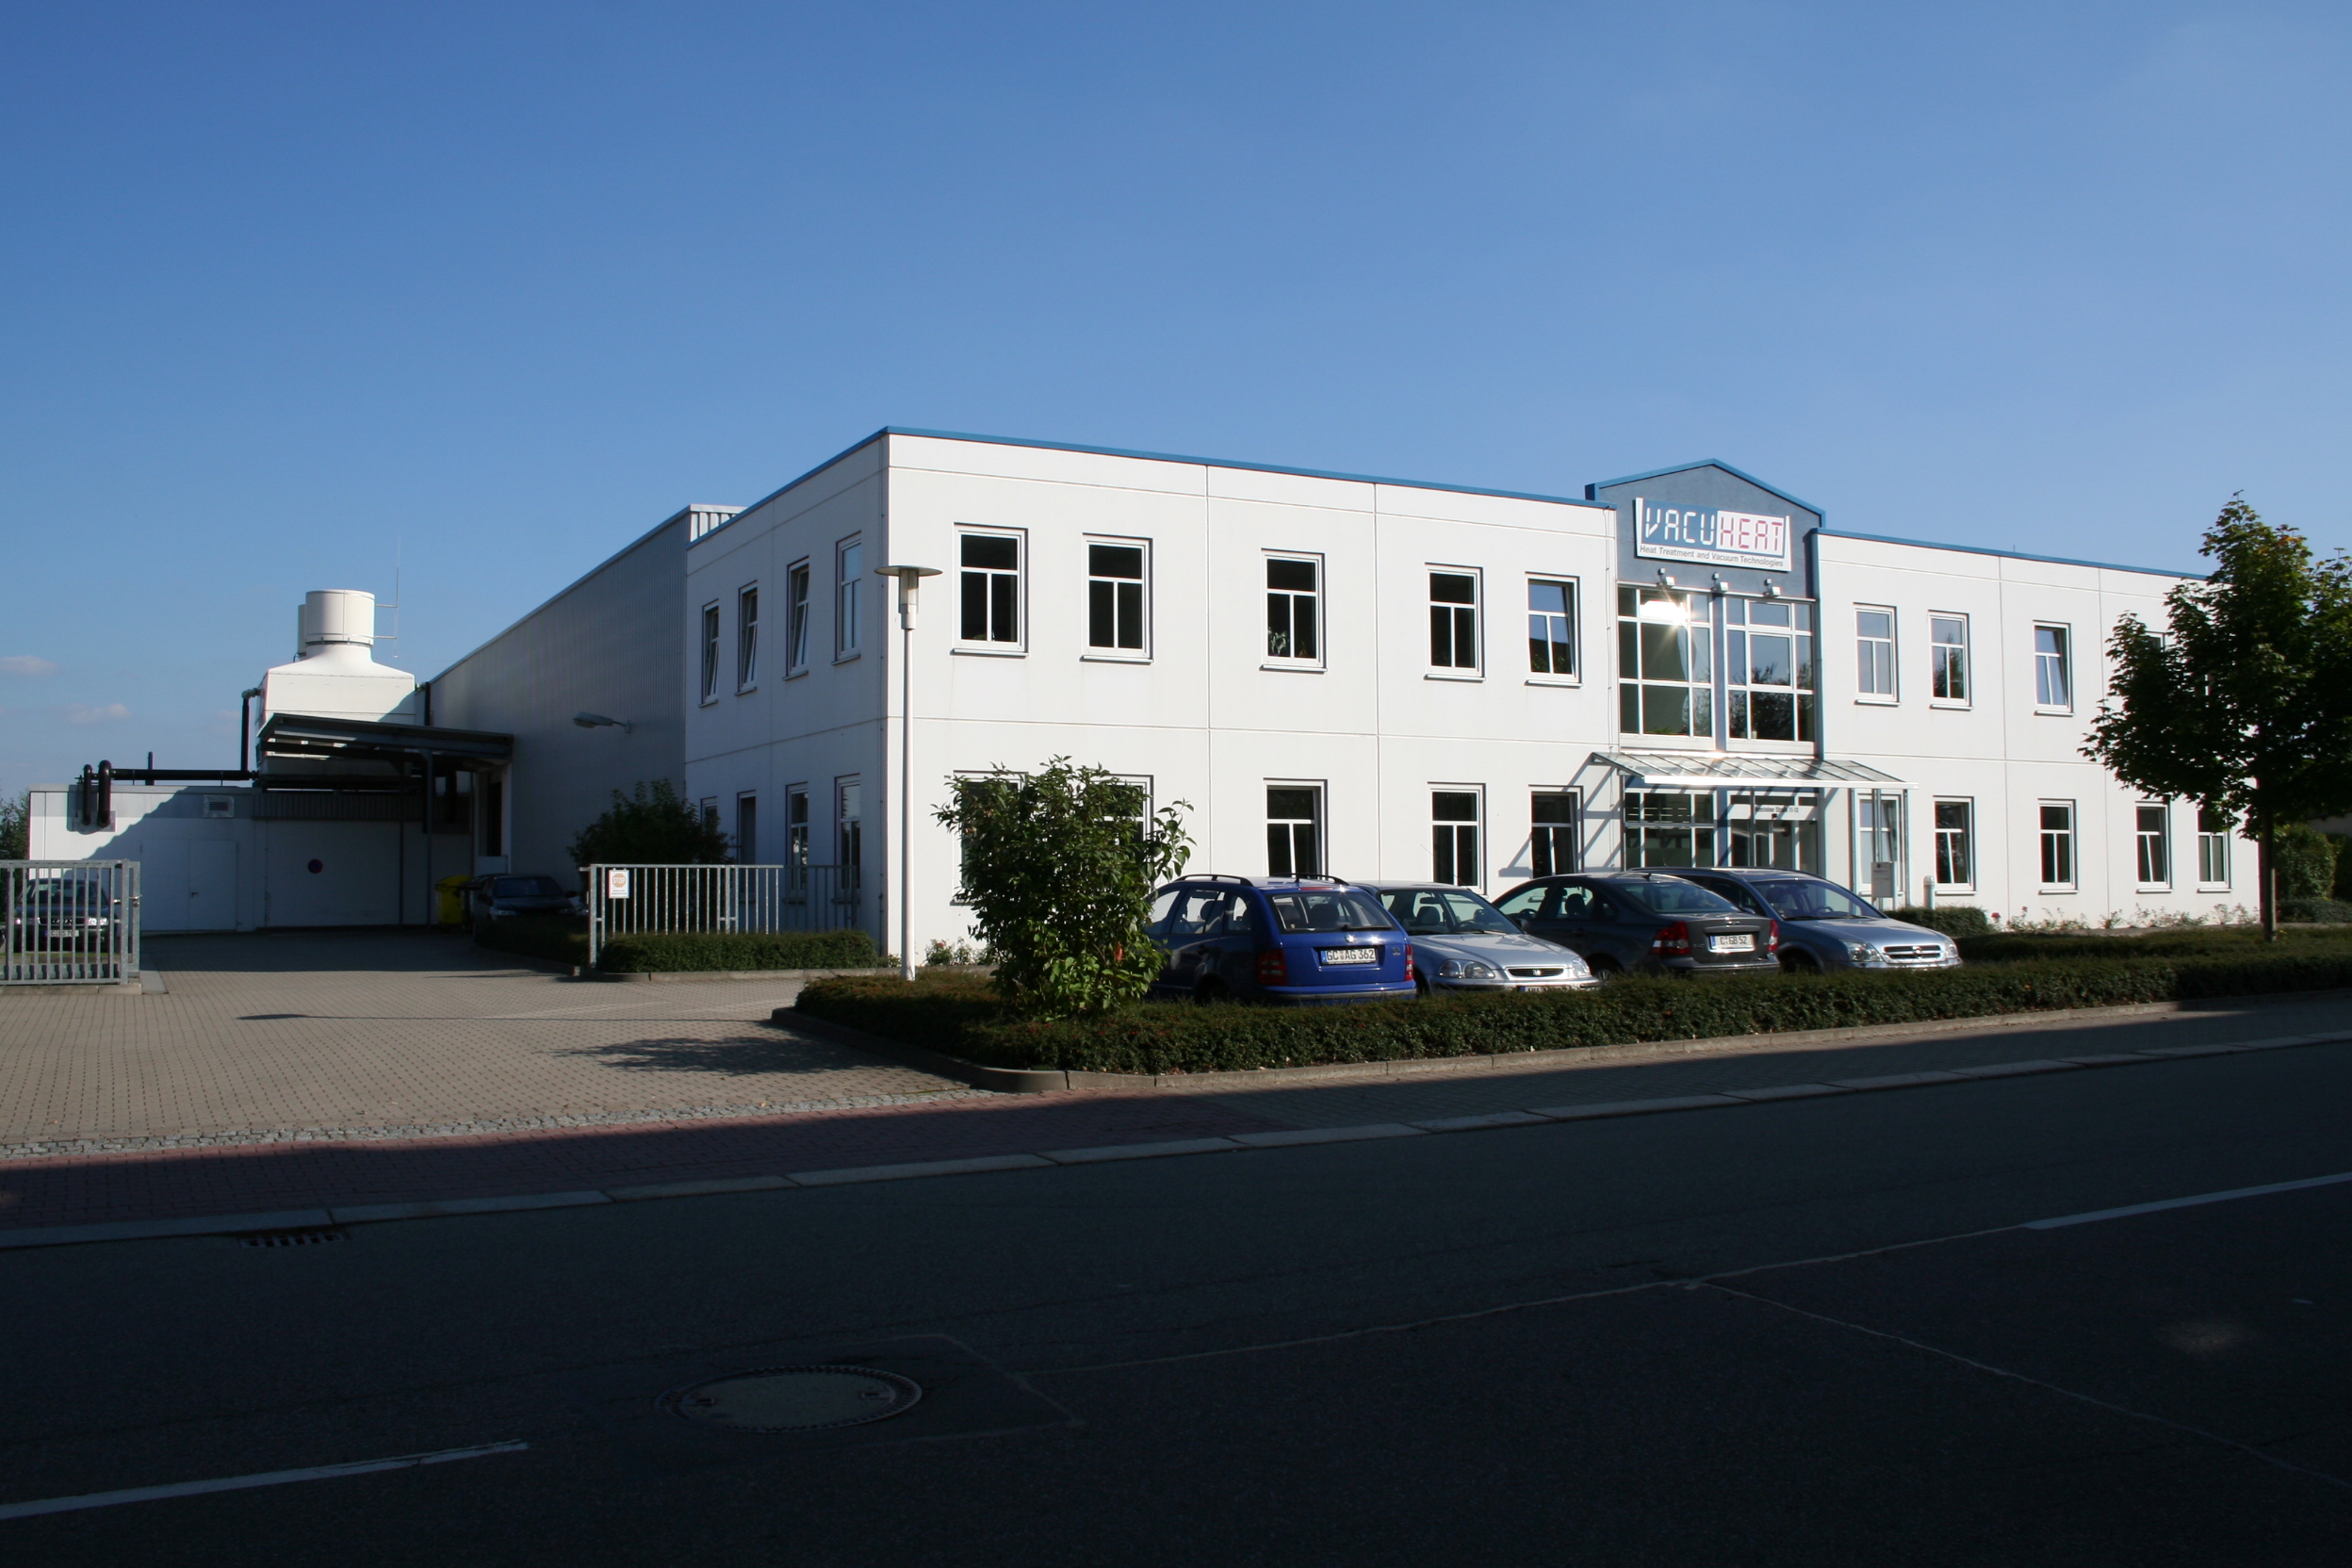 Vacuheat GmbH, Hohensteiner Strasse 11-13 in Limbach-Oberfrohna